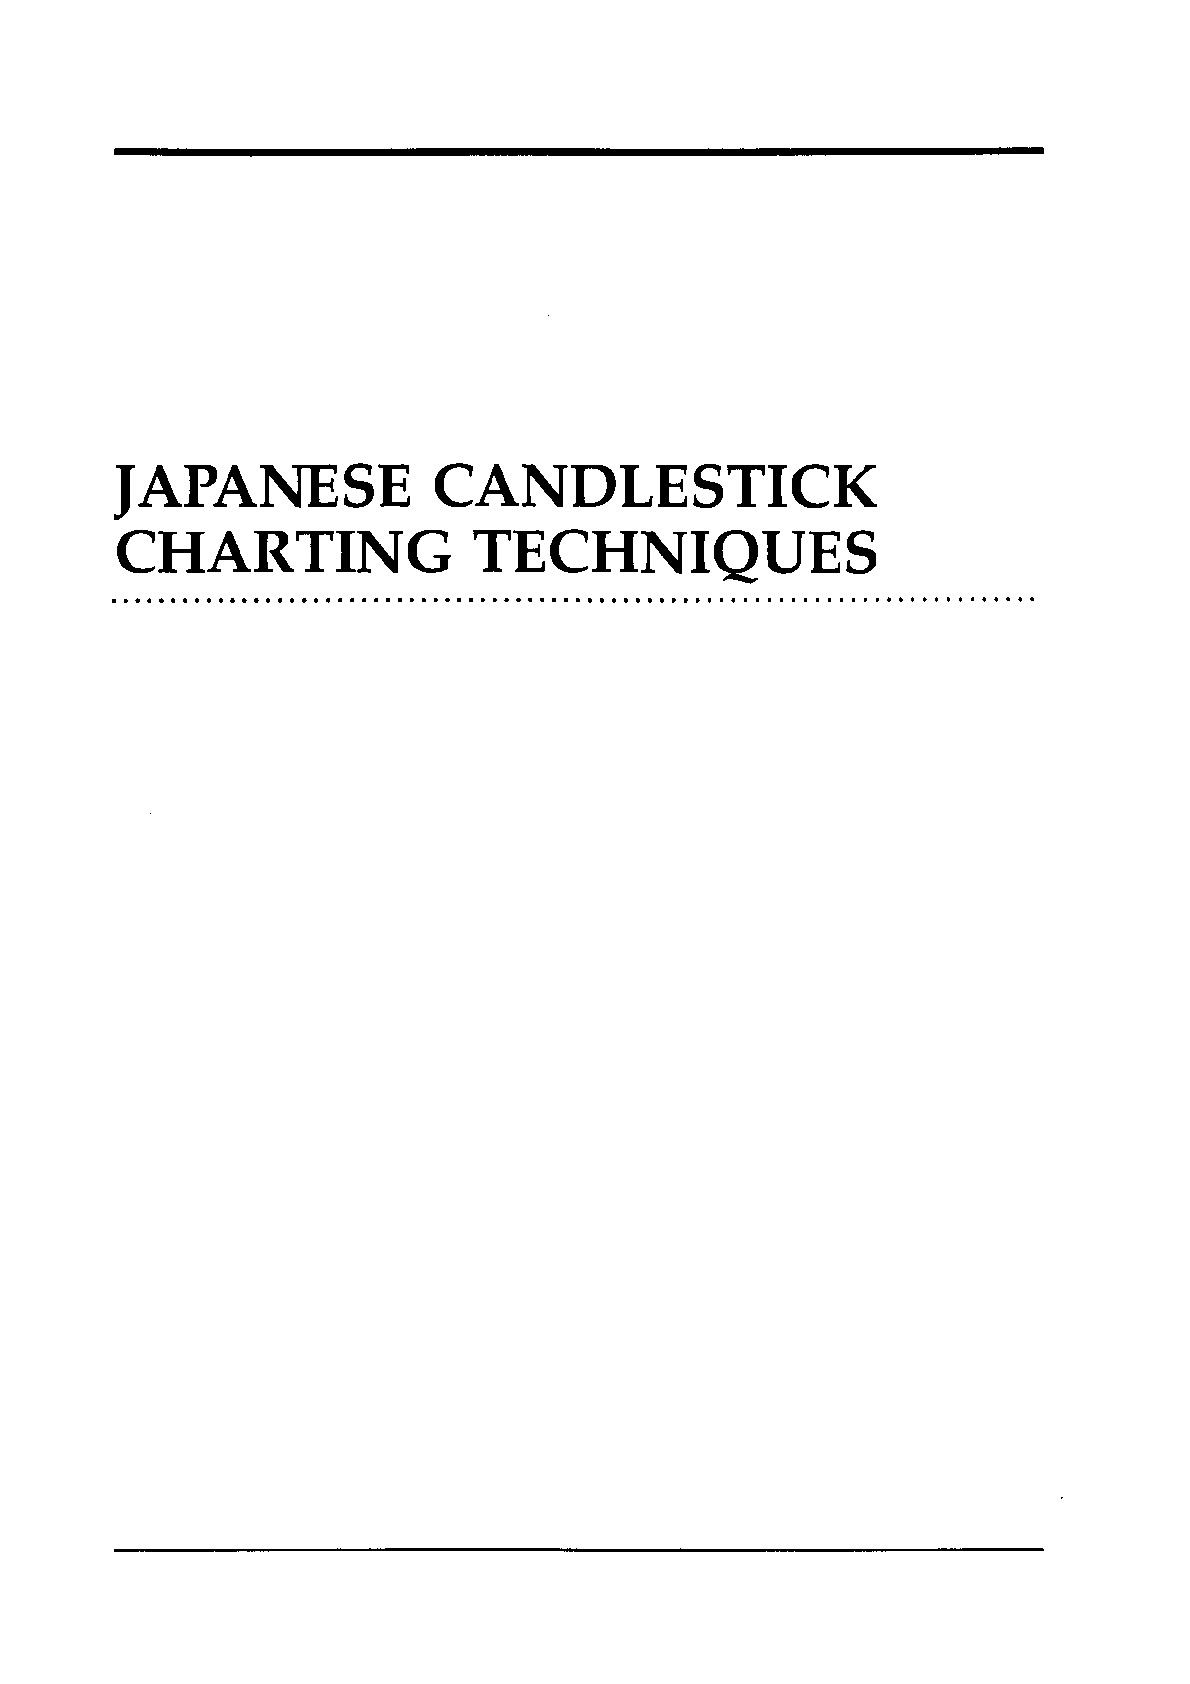 Steve_Nison-Japanese_Candlestick_Charting_Techniques-EN